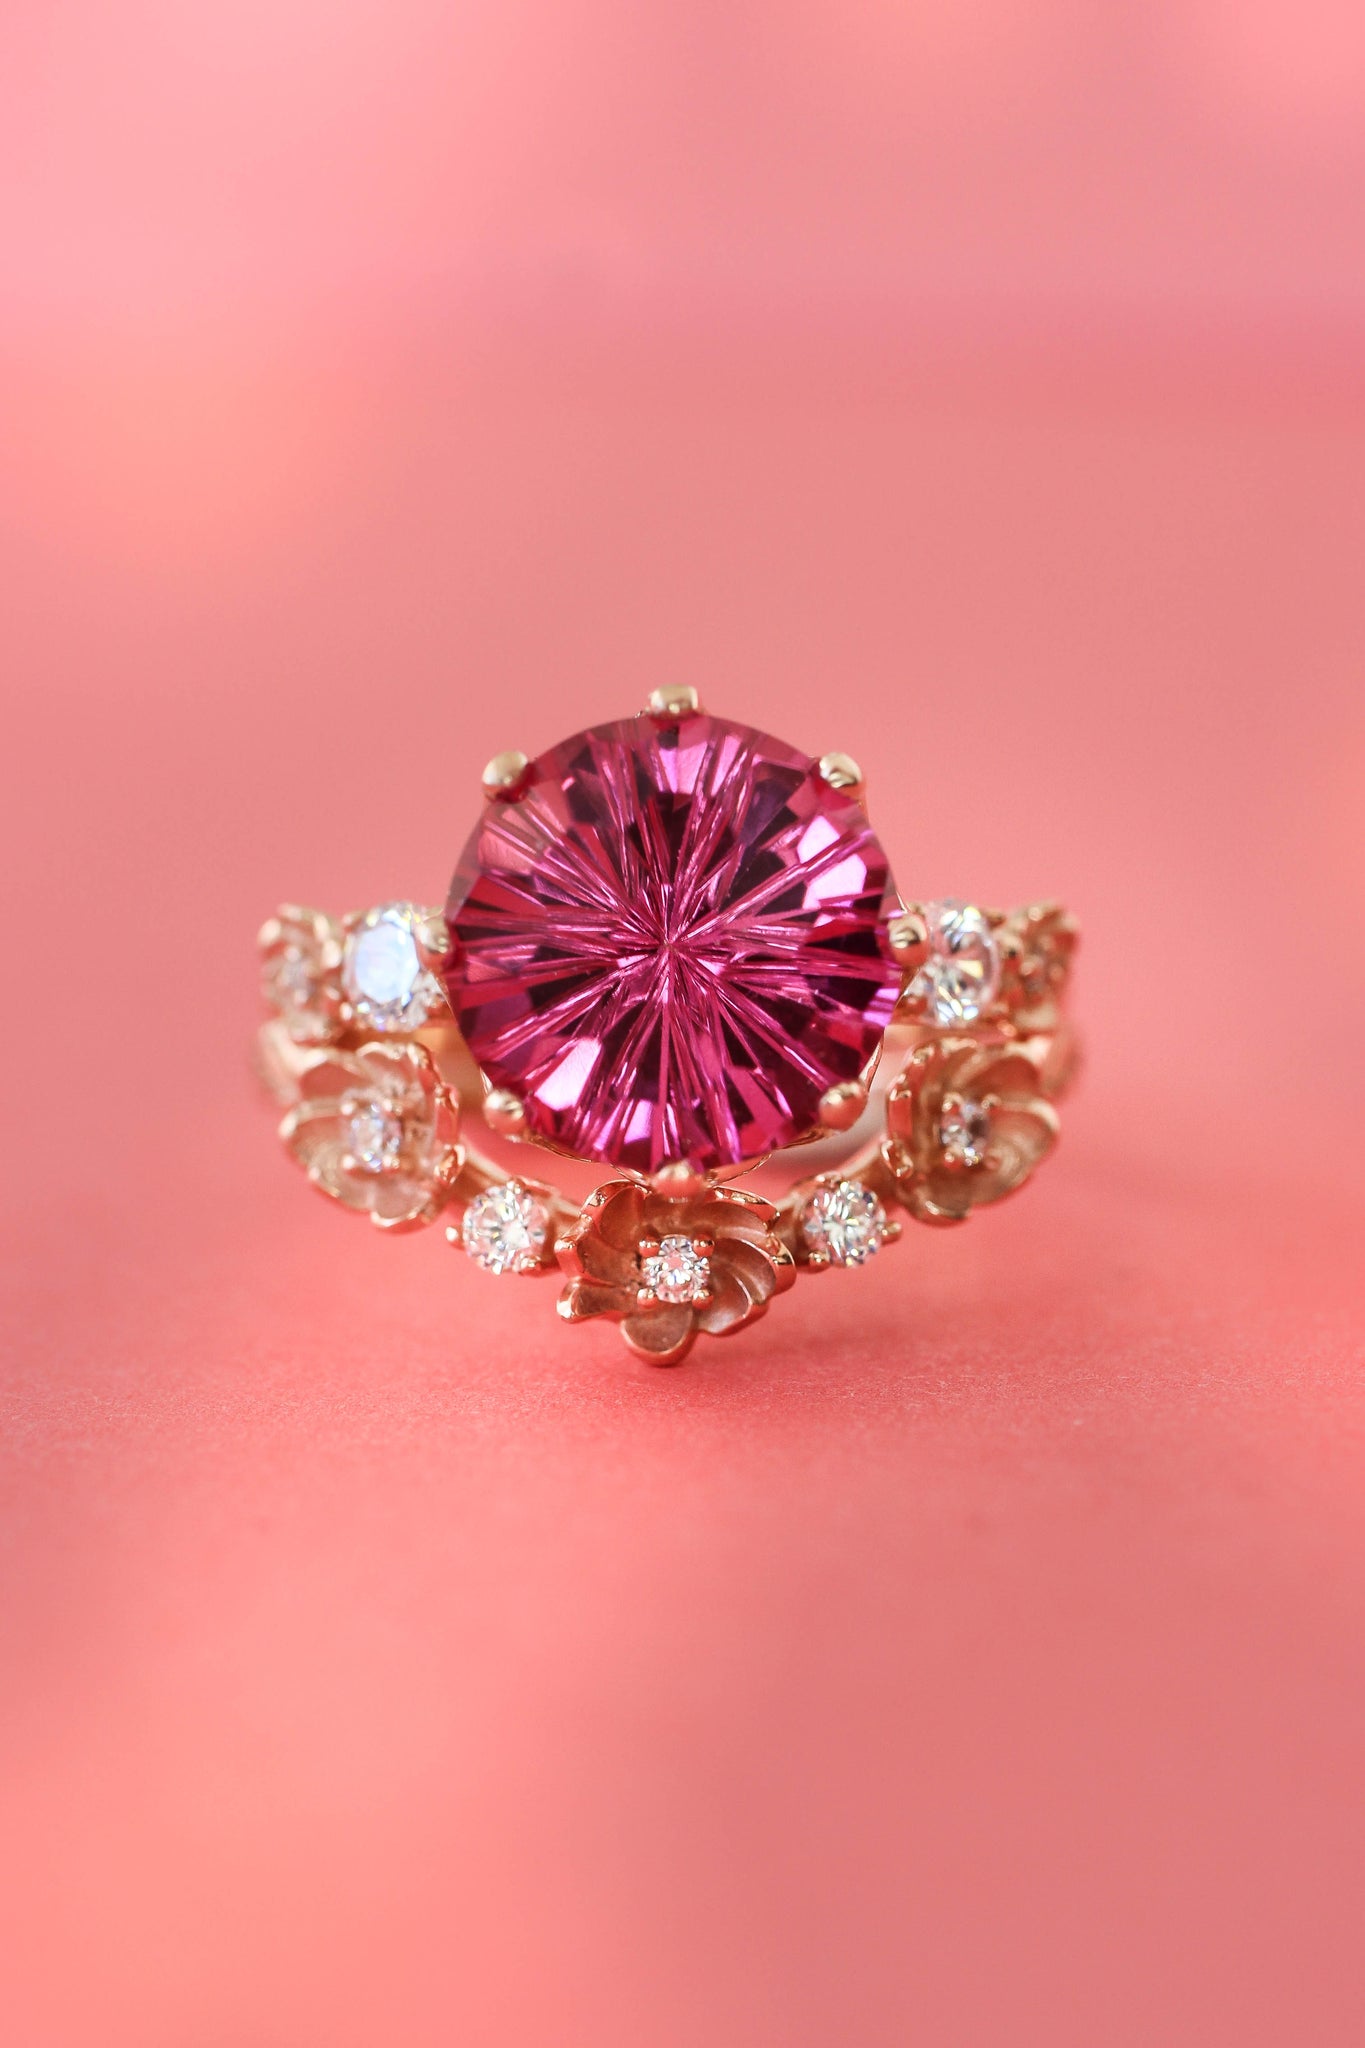 Fancy cut pink topaz engagement ring - Eden Garden Jewelry™